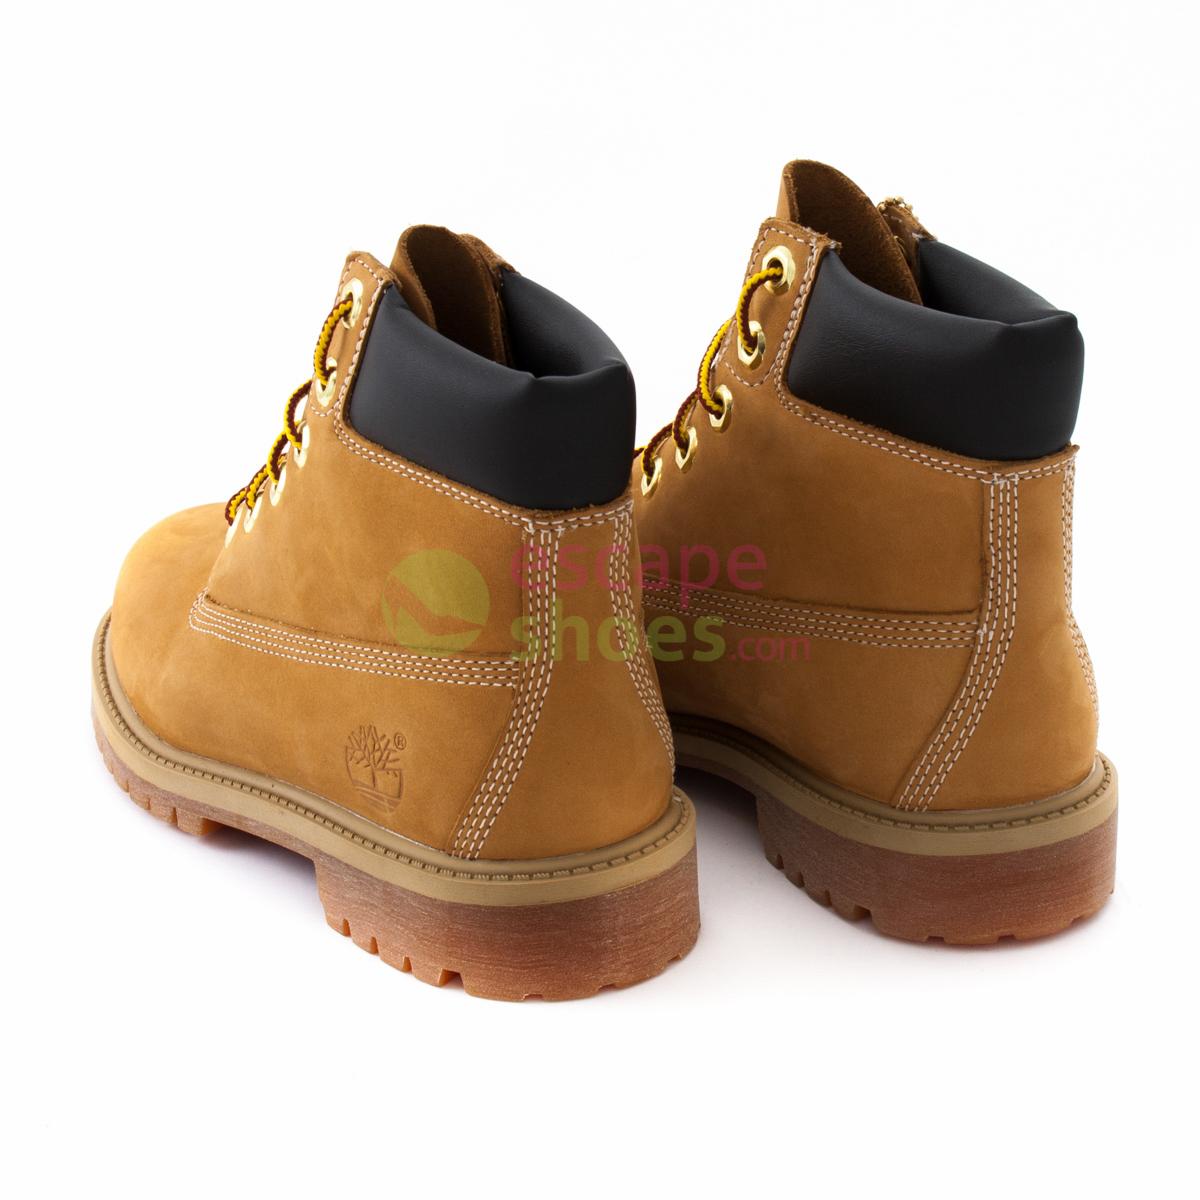 premium 6 inch boot for juniors in yellow